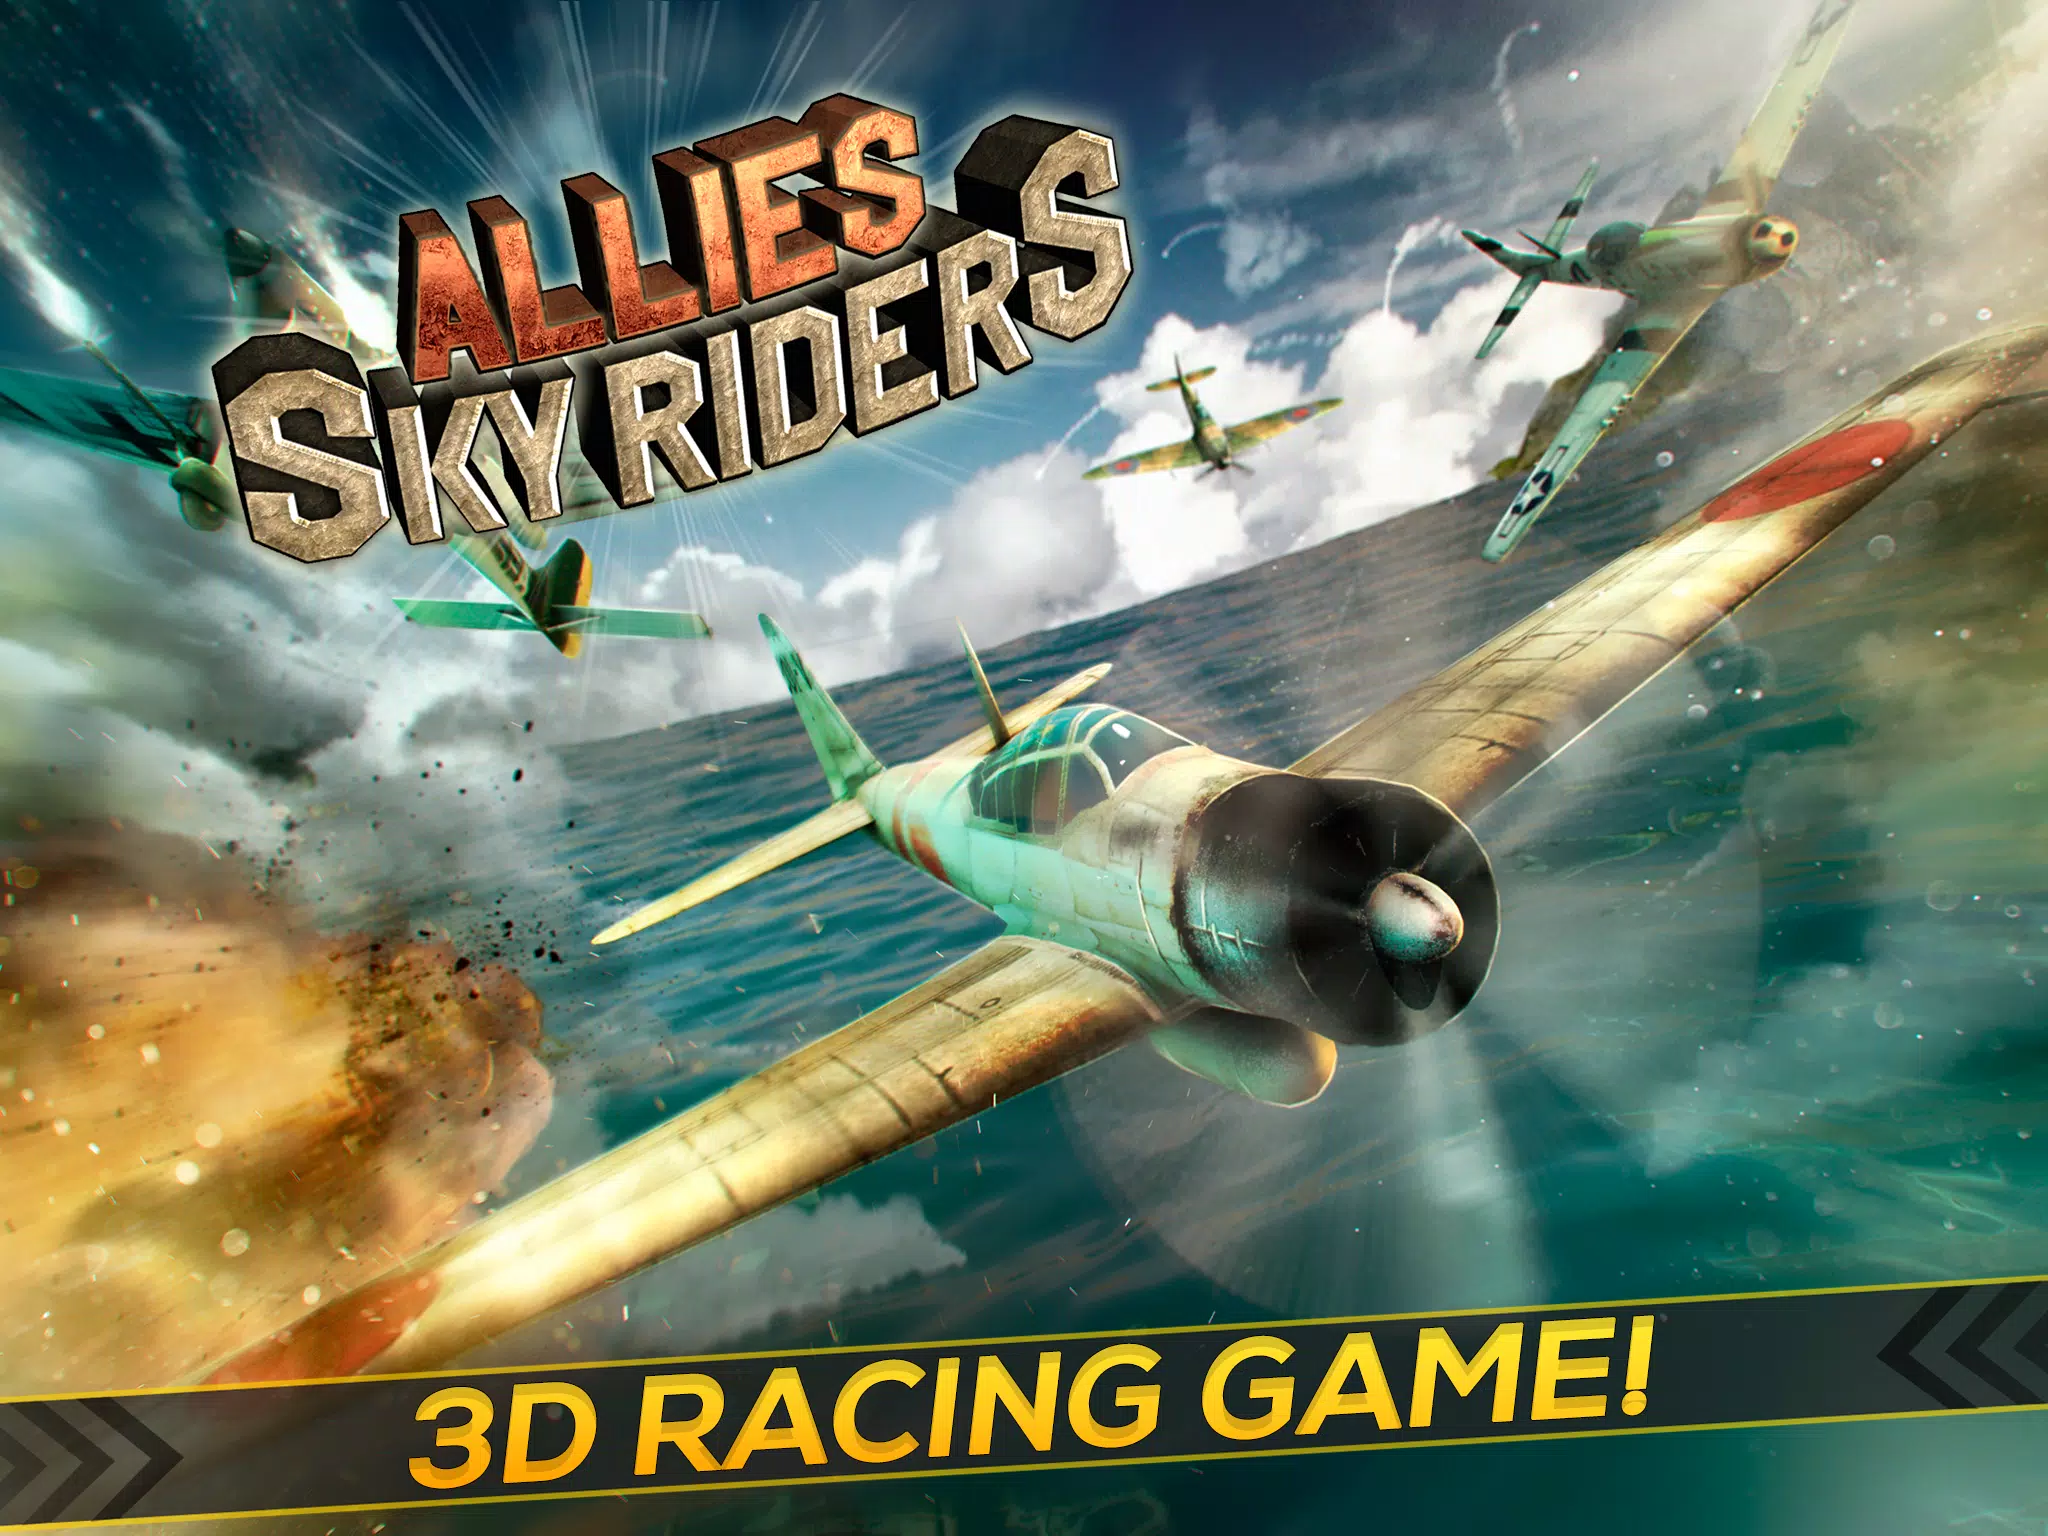 Download do APK de Combate de Aviões de Guerra 3D para Android